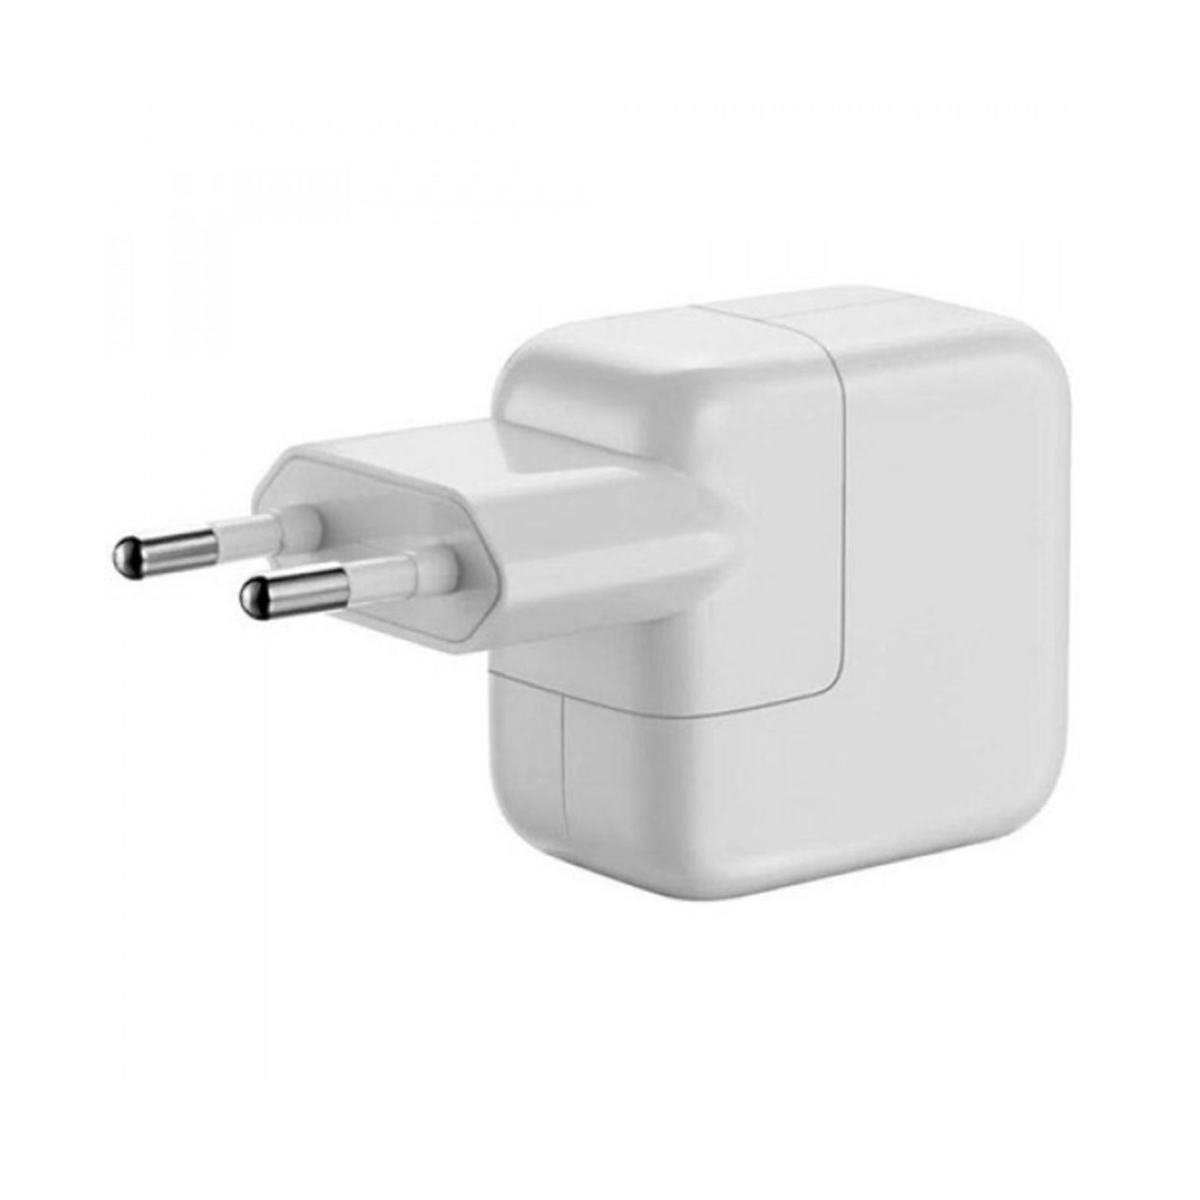 Купить зарядку эпл. Сетевая зарядка Apple md836zm/a. Адаптер питания Apple USB 12w. Адаптер питания Apple USB мощностью 12 Вт. Зарядка Apple 12w.